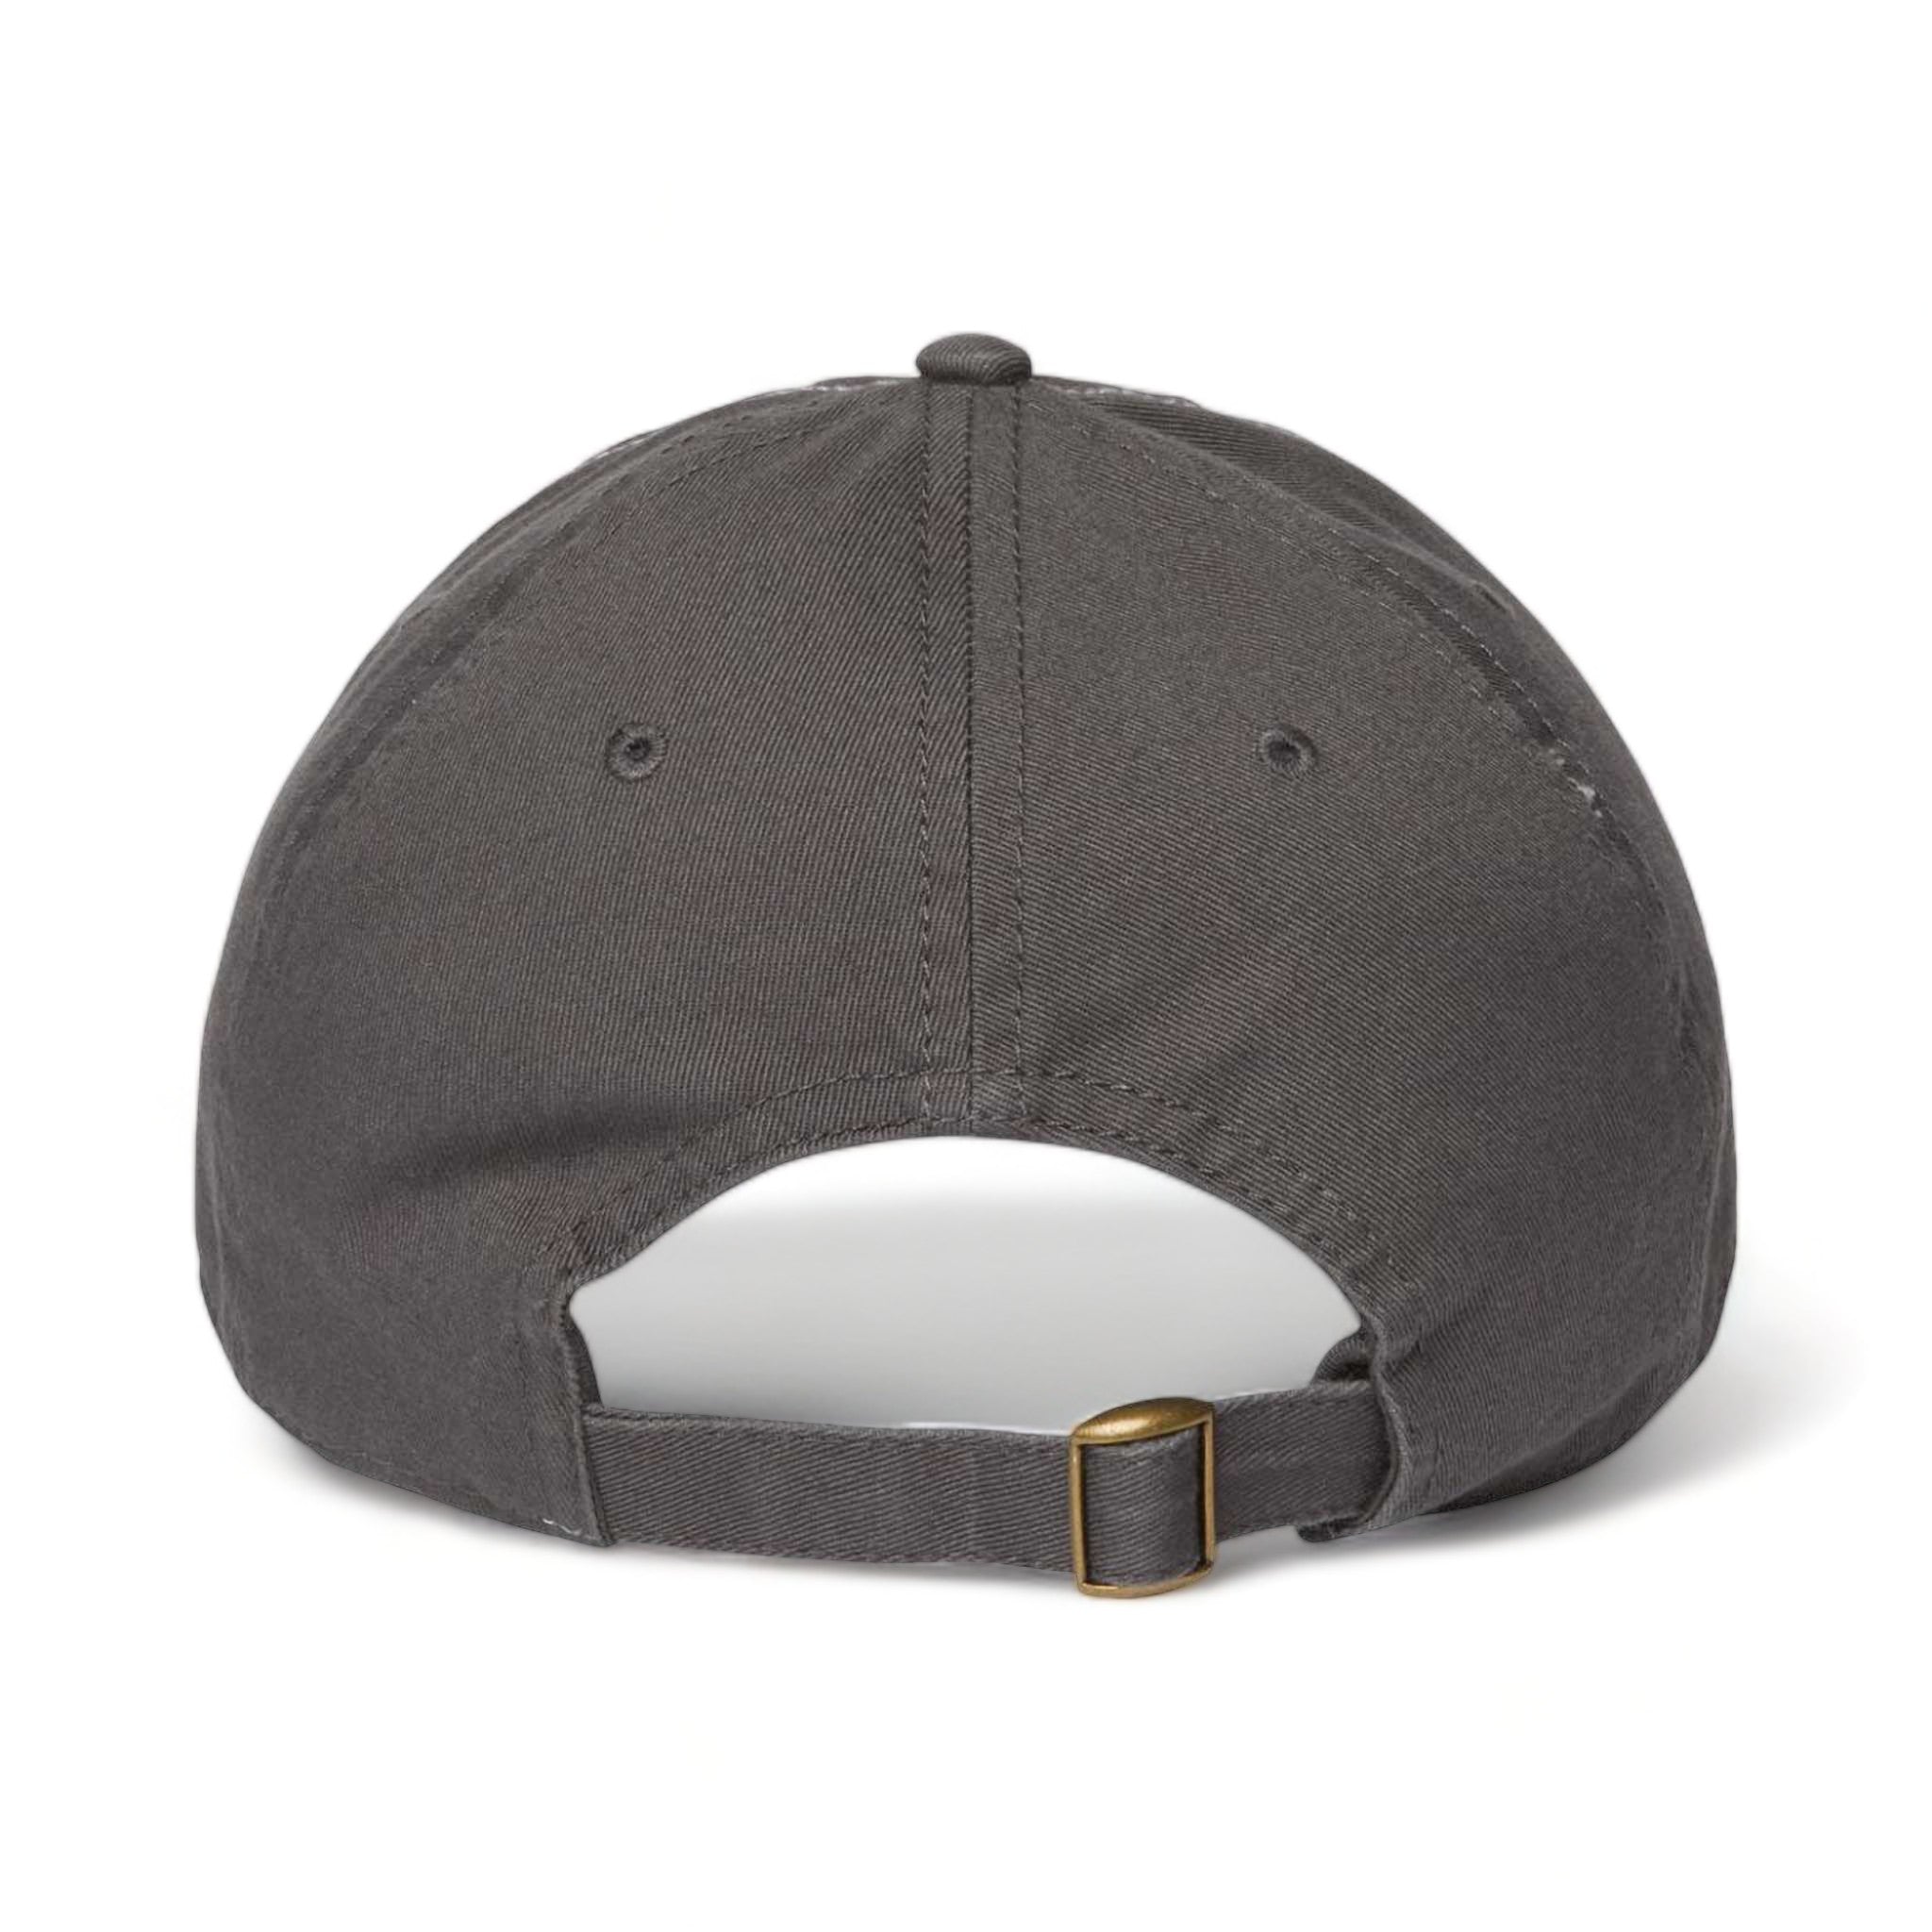 Back view of CAP AMERICA i1002 custom hat in white and dark grey